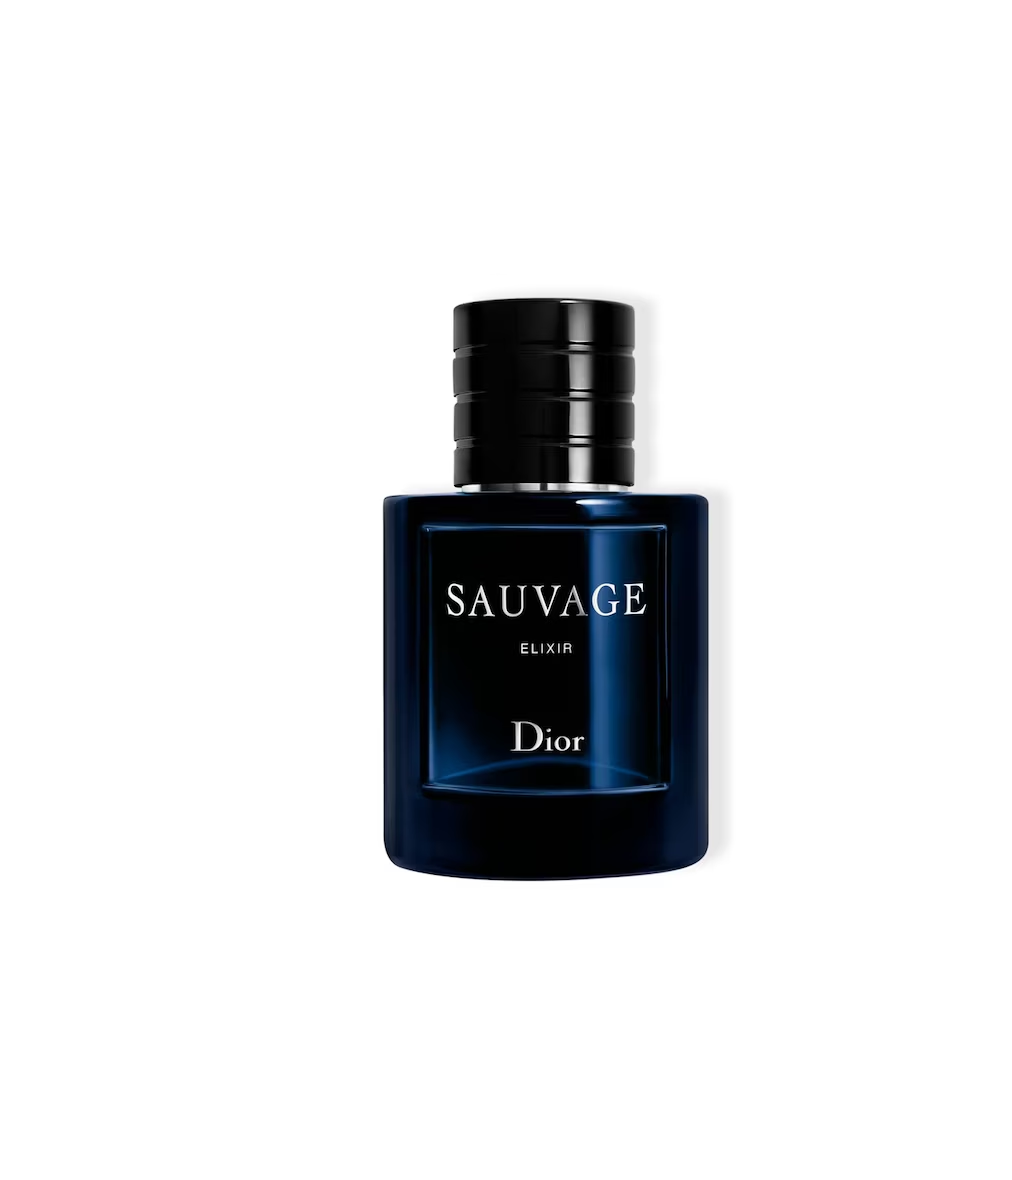 Perfume Dior Sauvage elixir eau de parfum 60 ml. Hombre Dior Dior